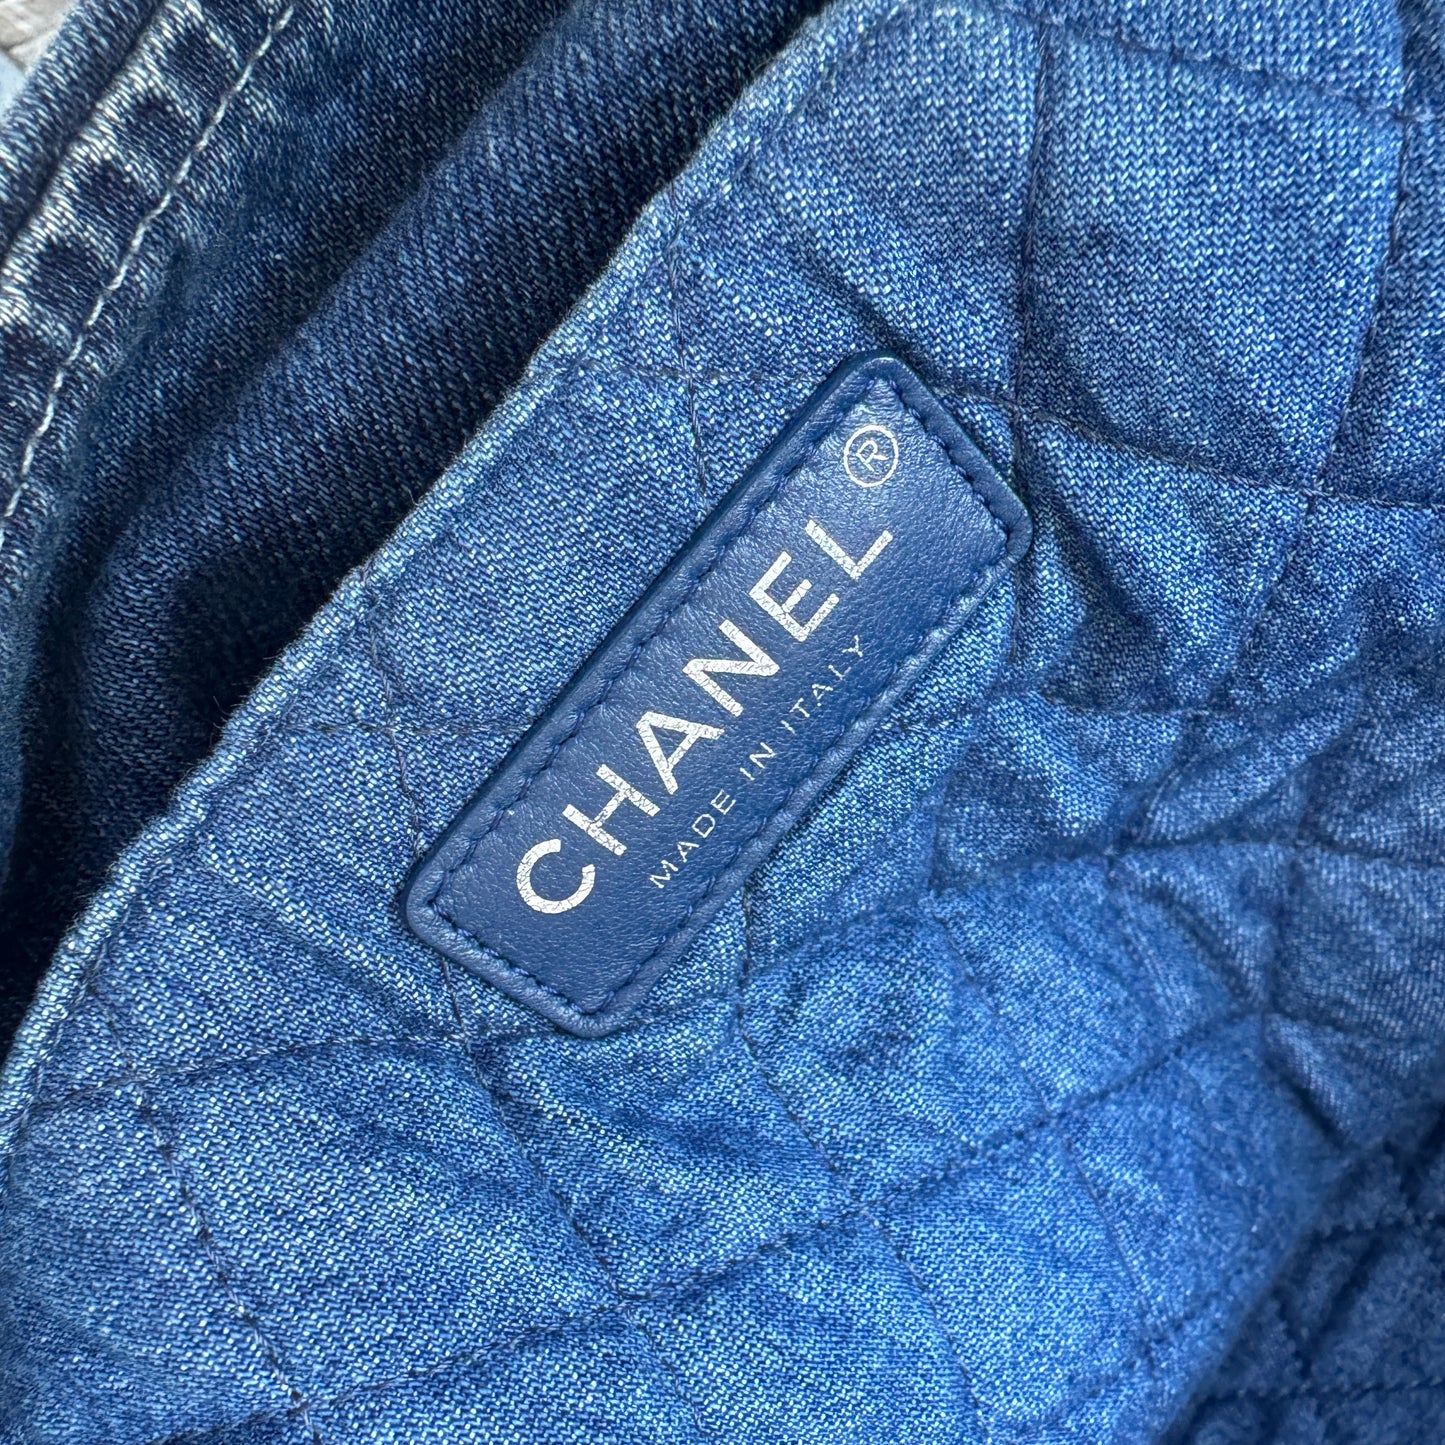 Chanel Large Denim Shopping Bag w/ Pouch